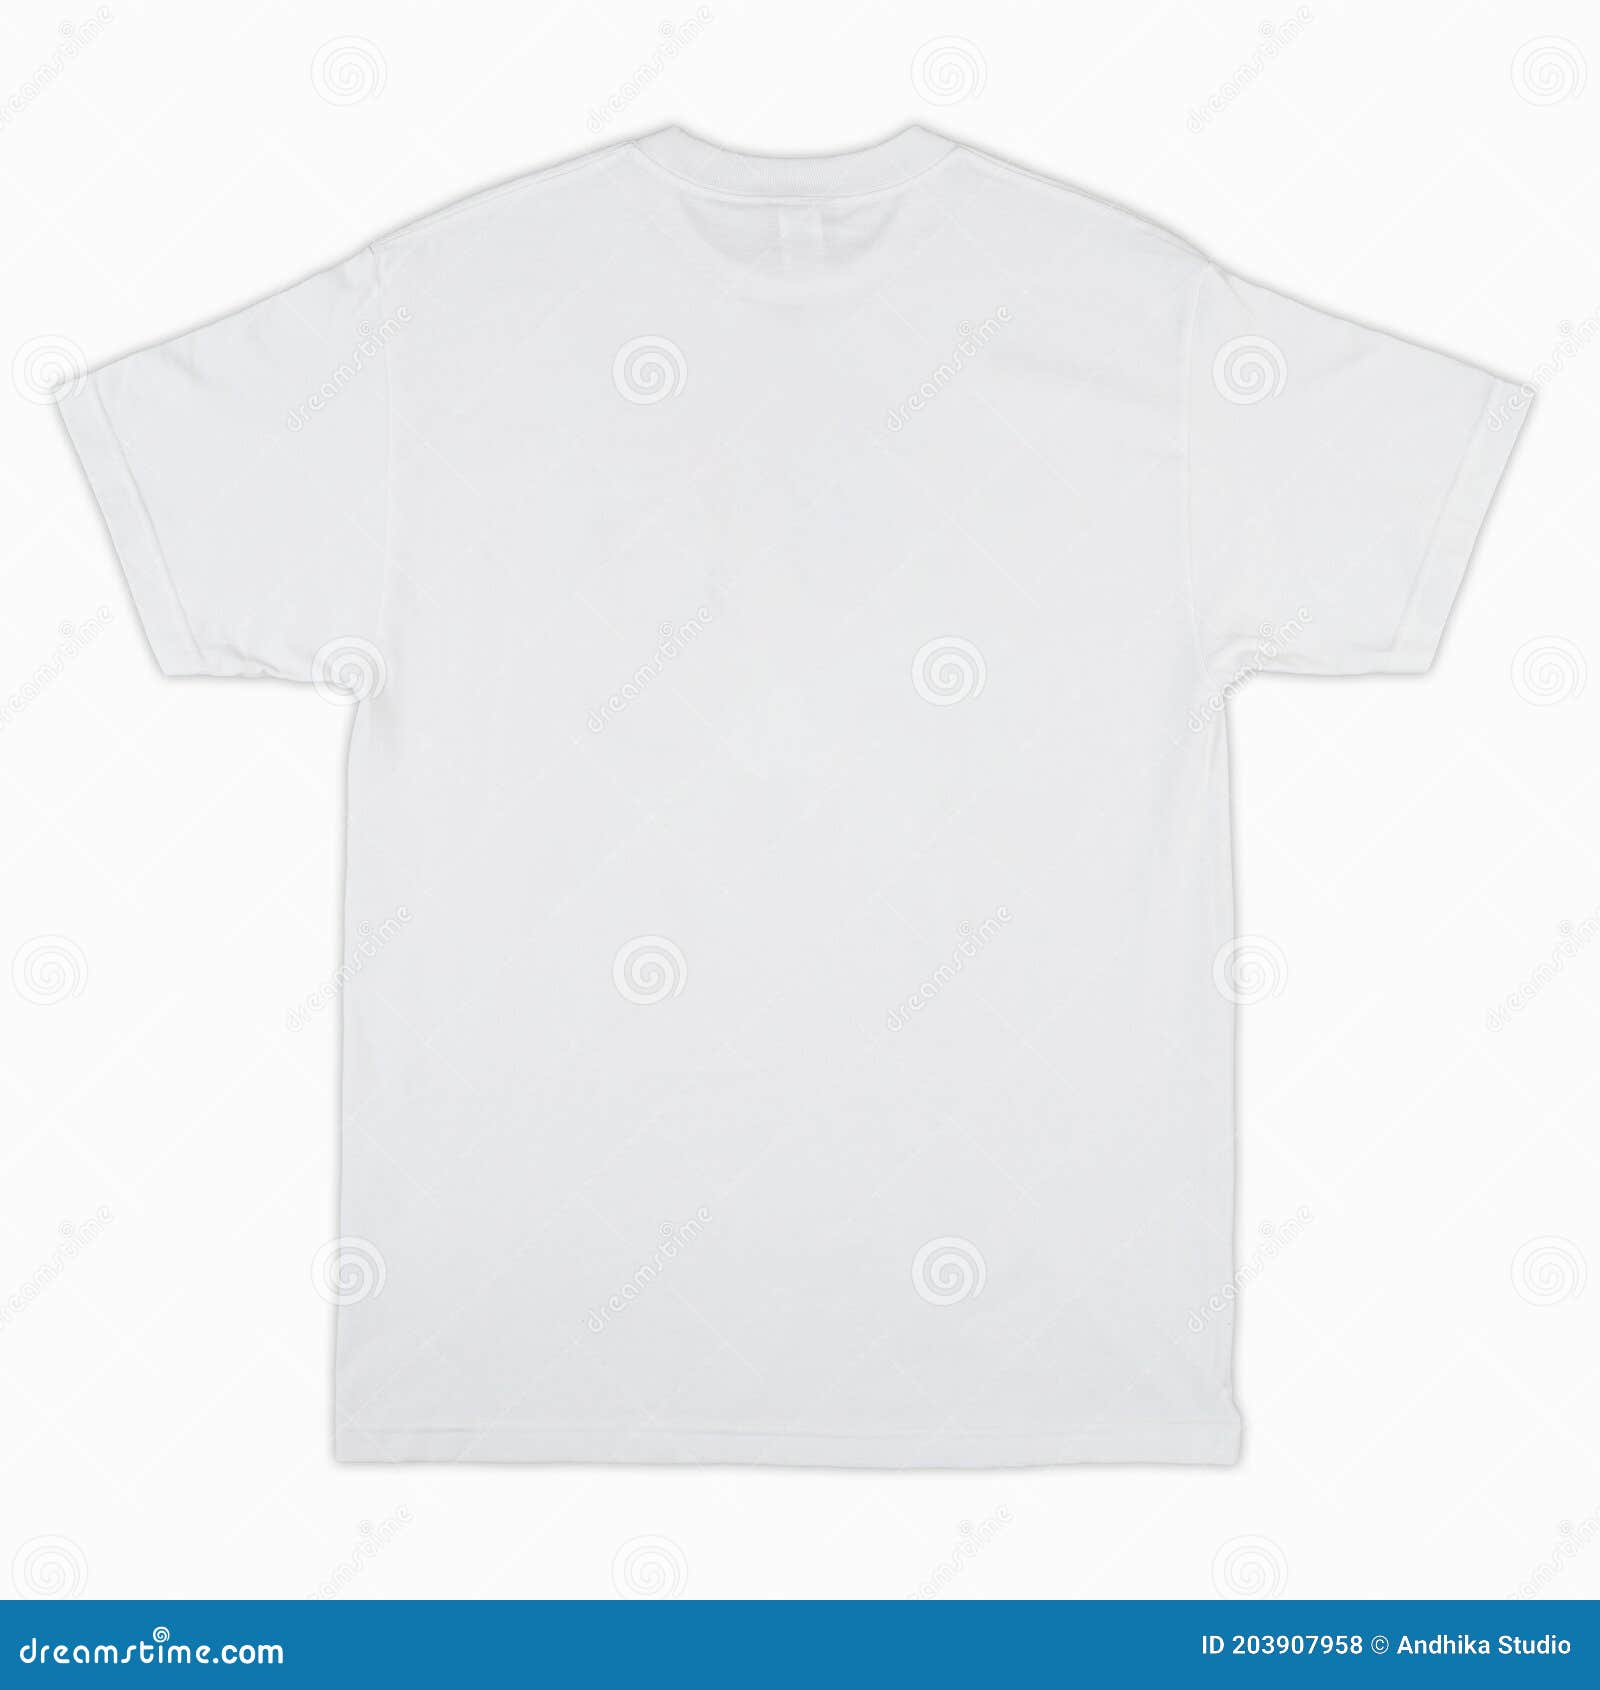 plain white shirt images